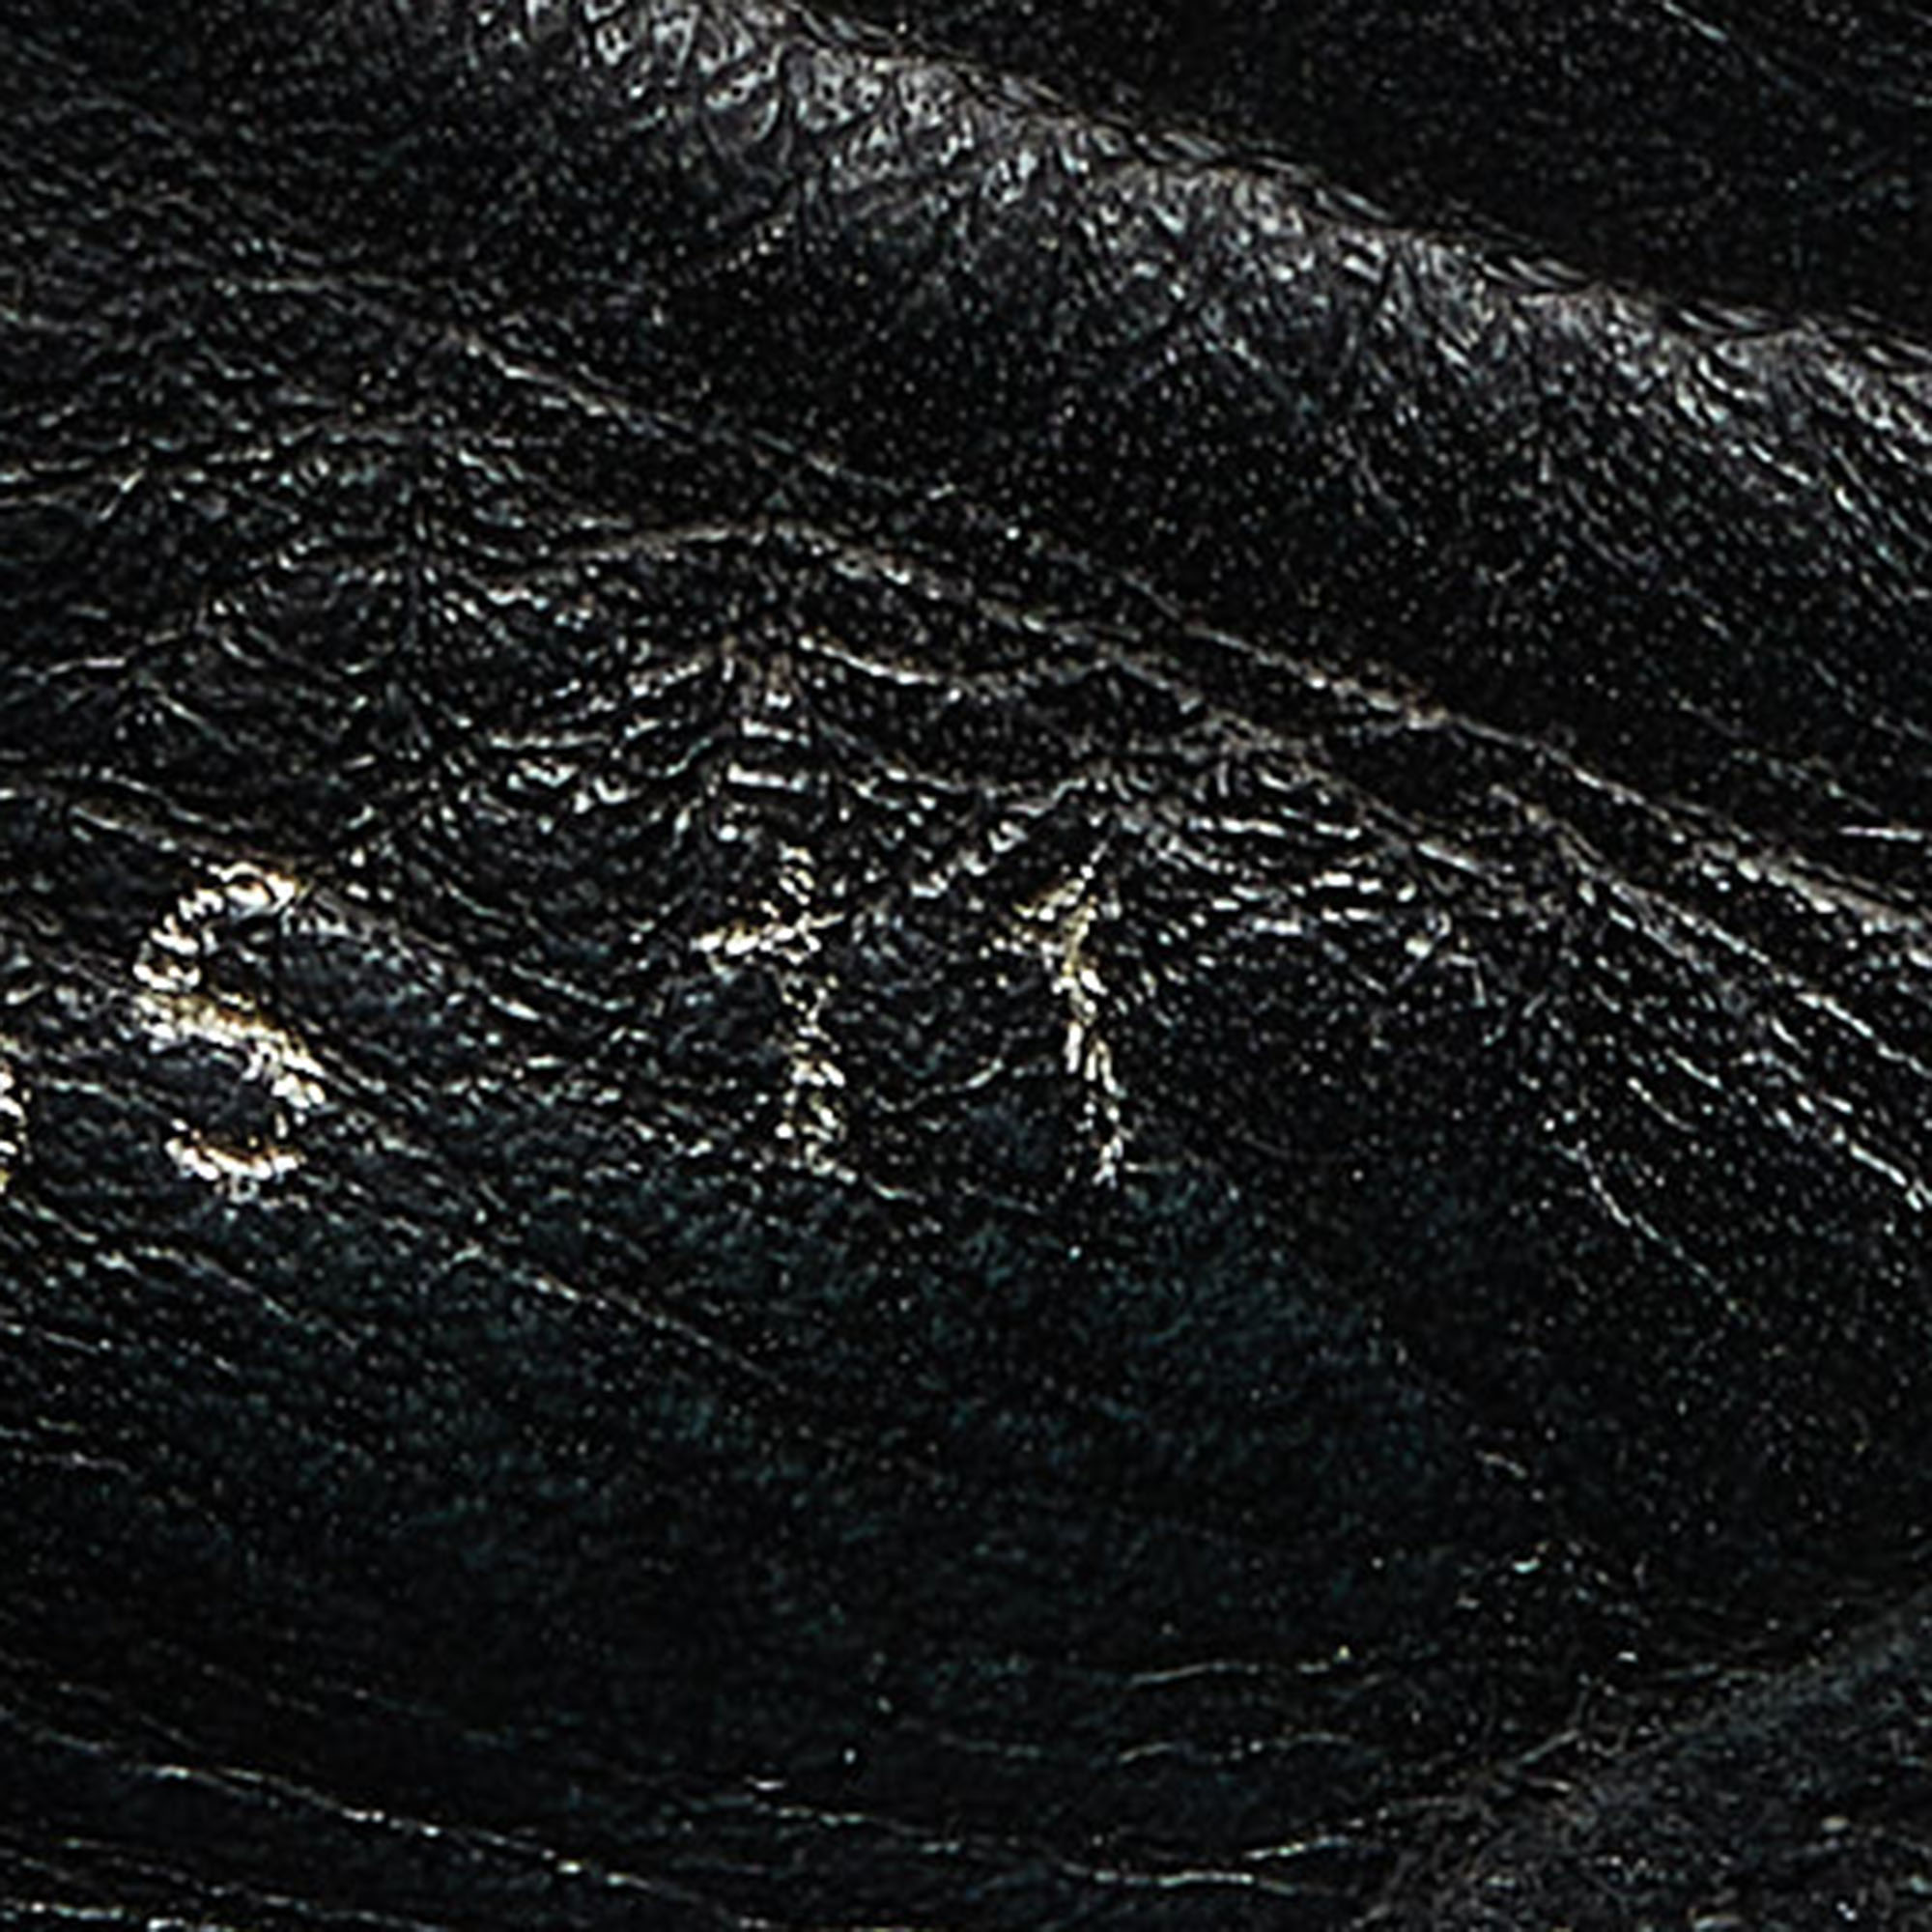 Prada Sport Black Leather Low Top Sneakers Size 45